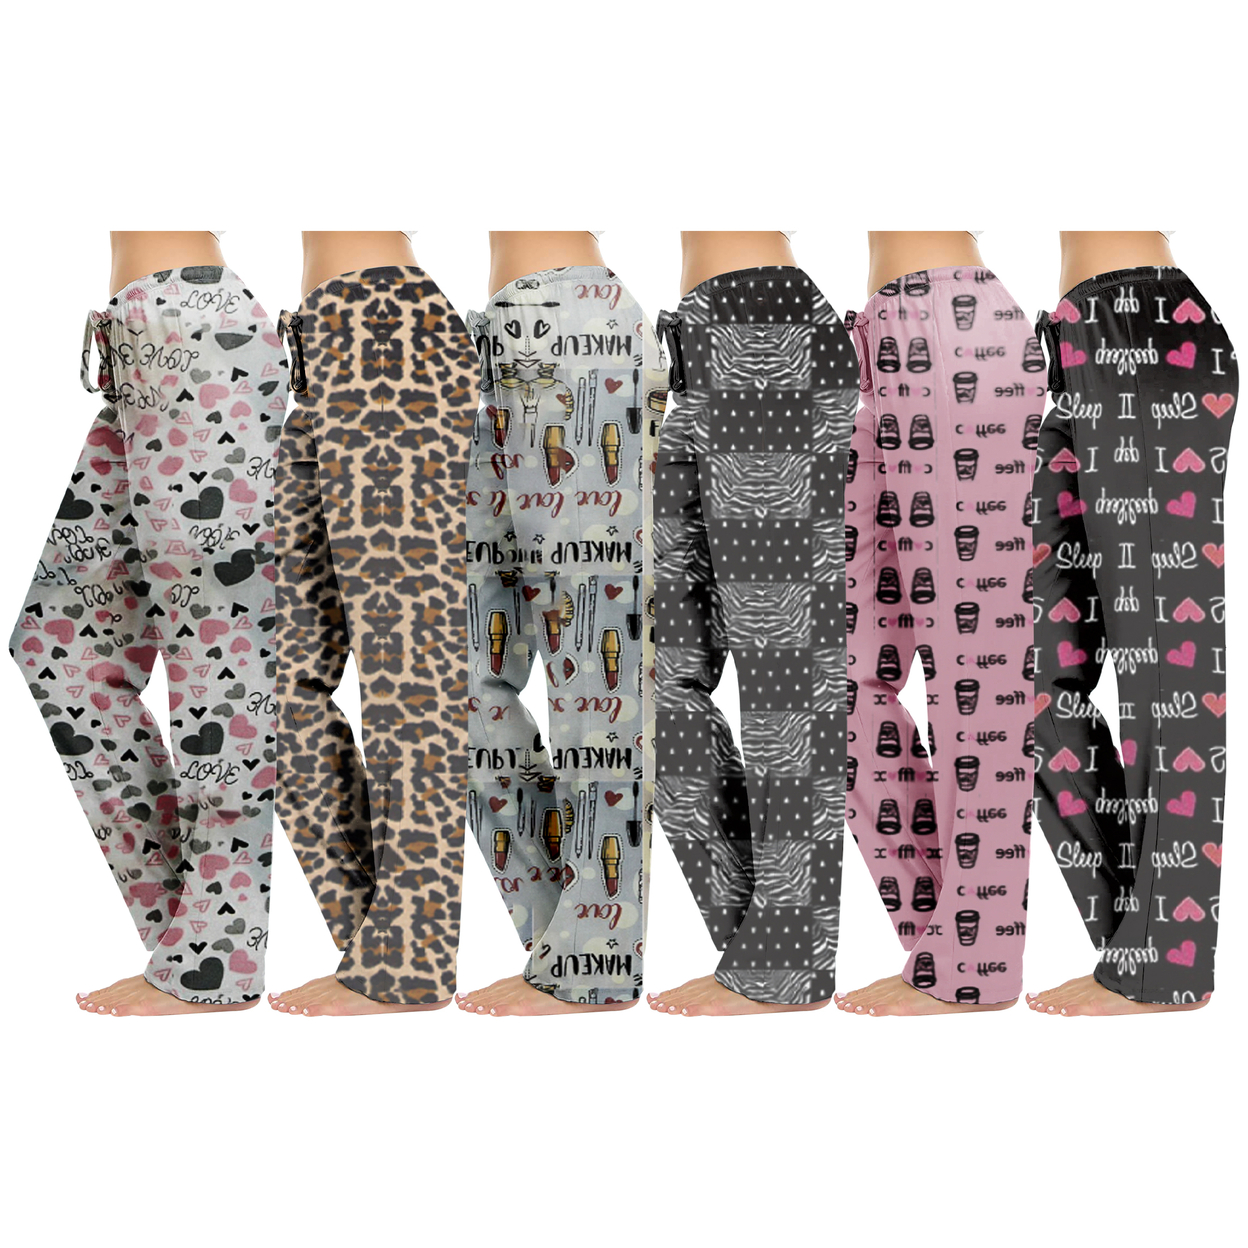 2-Pack: Women's Casual Fun Printed Lightweight Lounge Terry Knit Pajama Bottom Pants - Medium, Animal